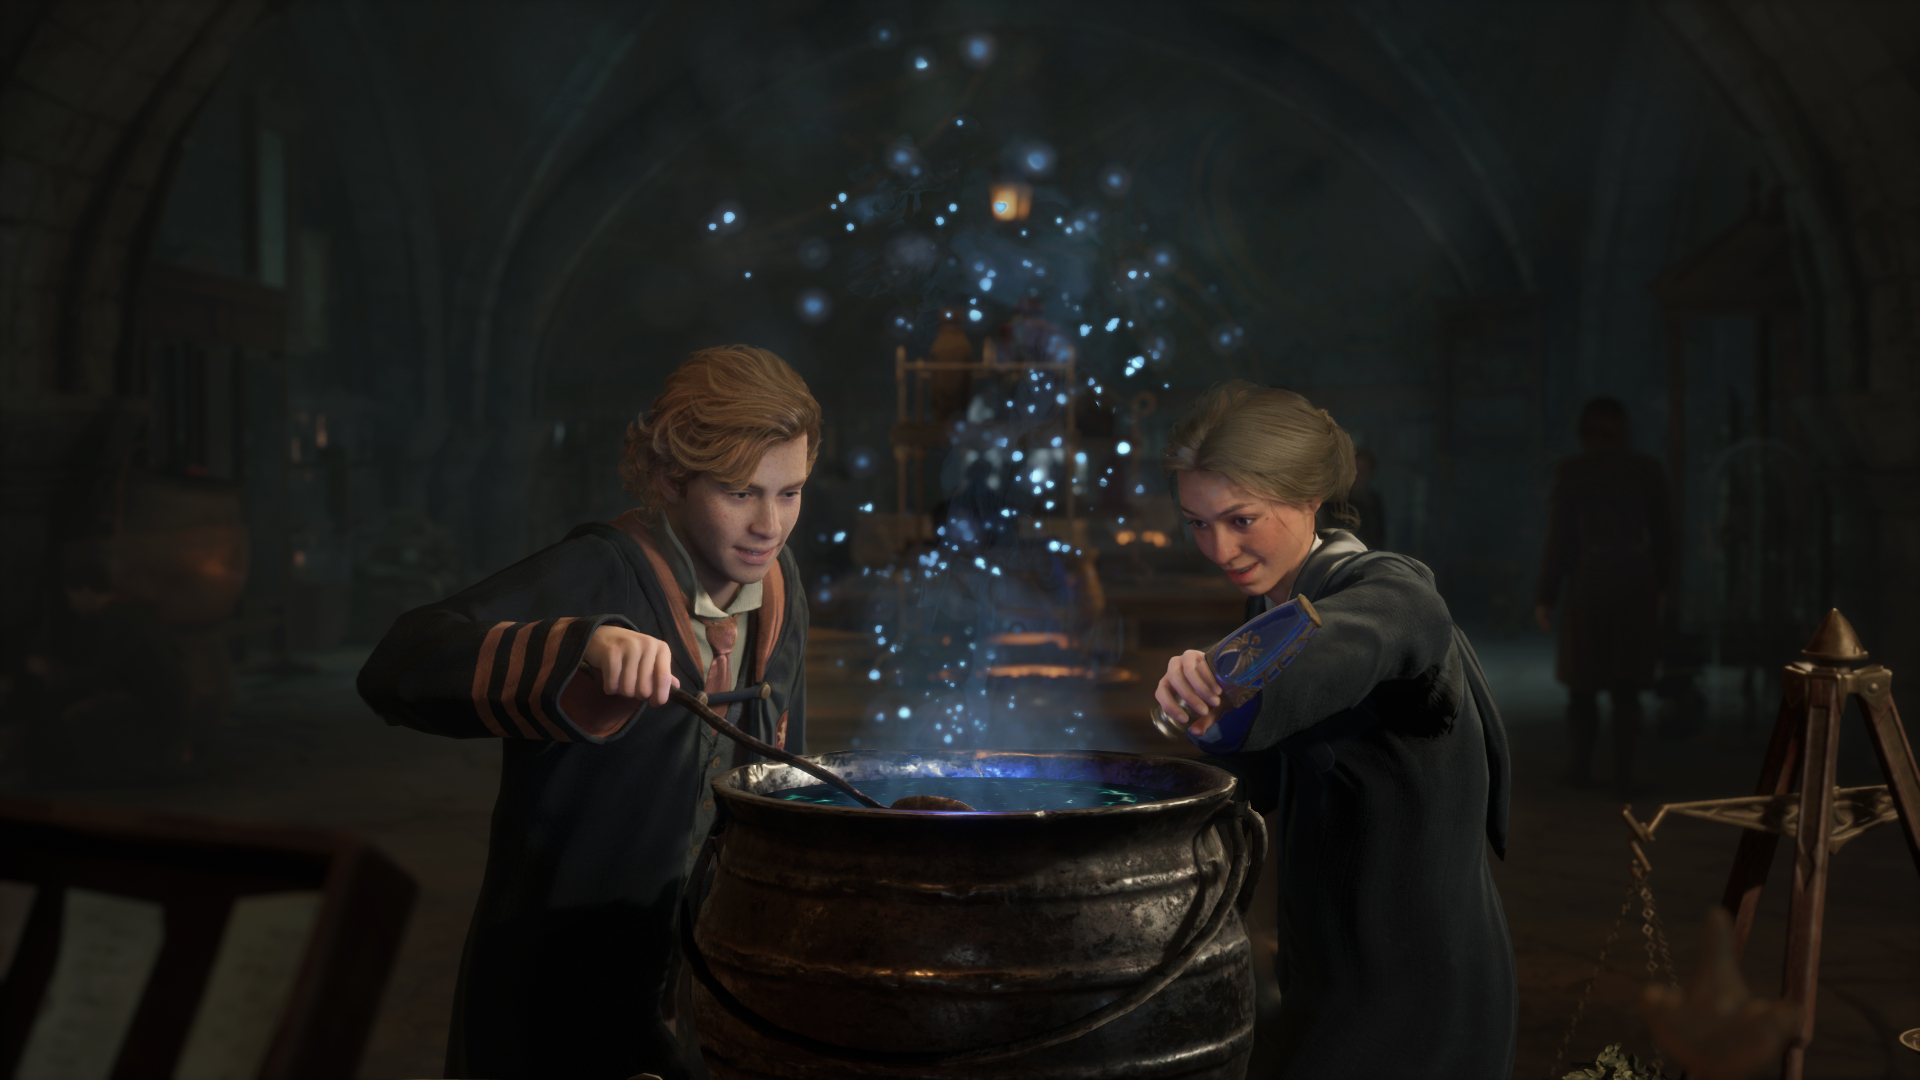 Leakage: Hogwarts Legecy pre-order bonuses are possible